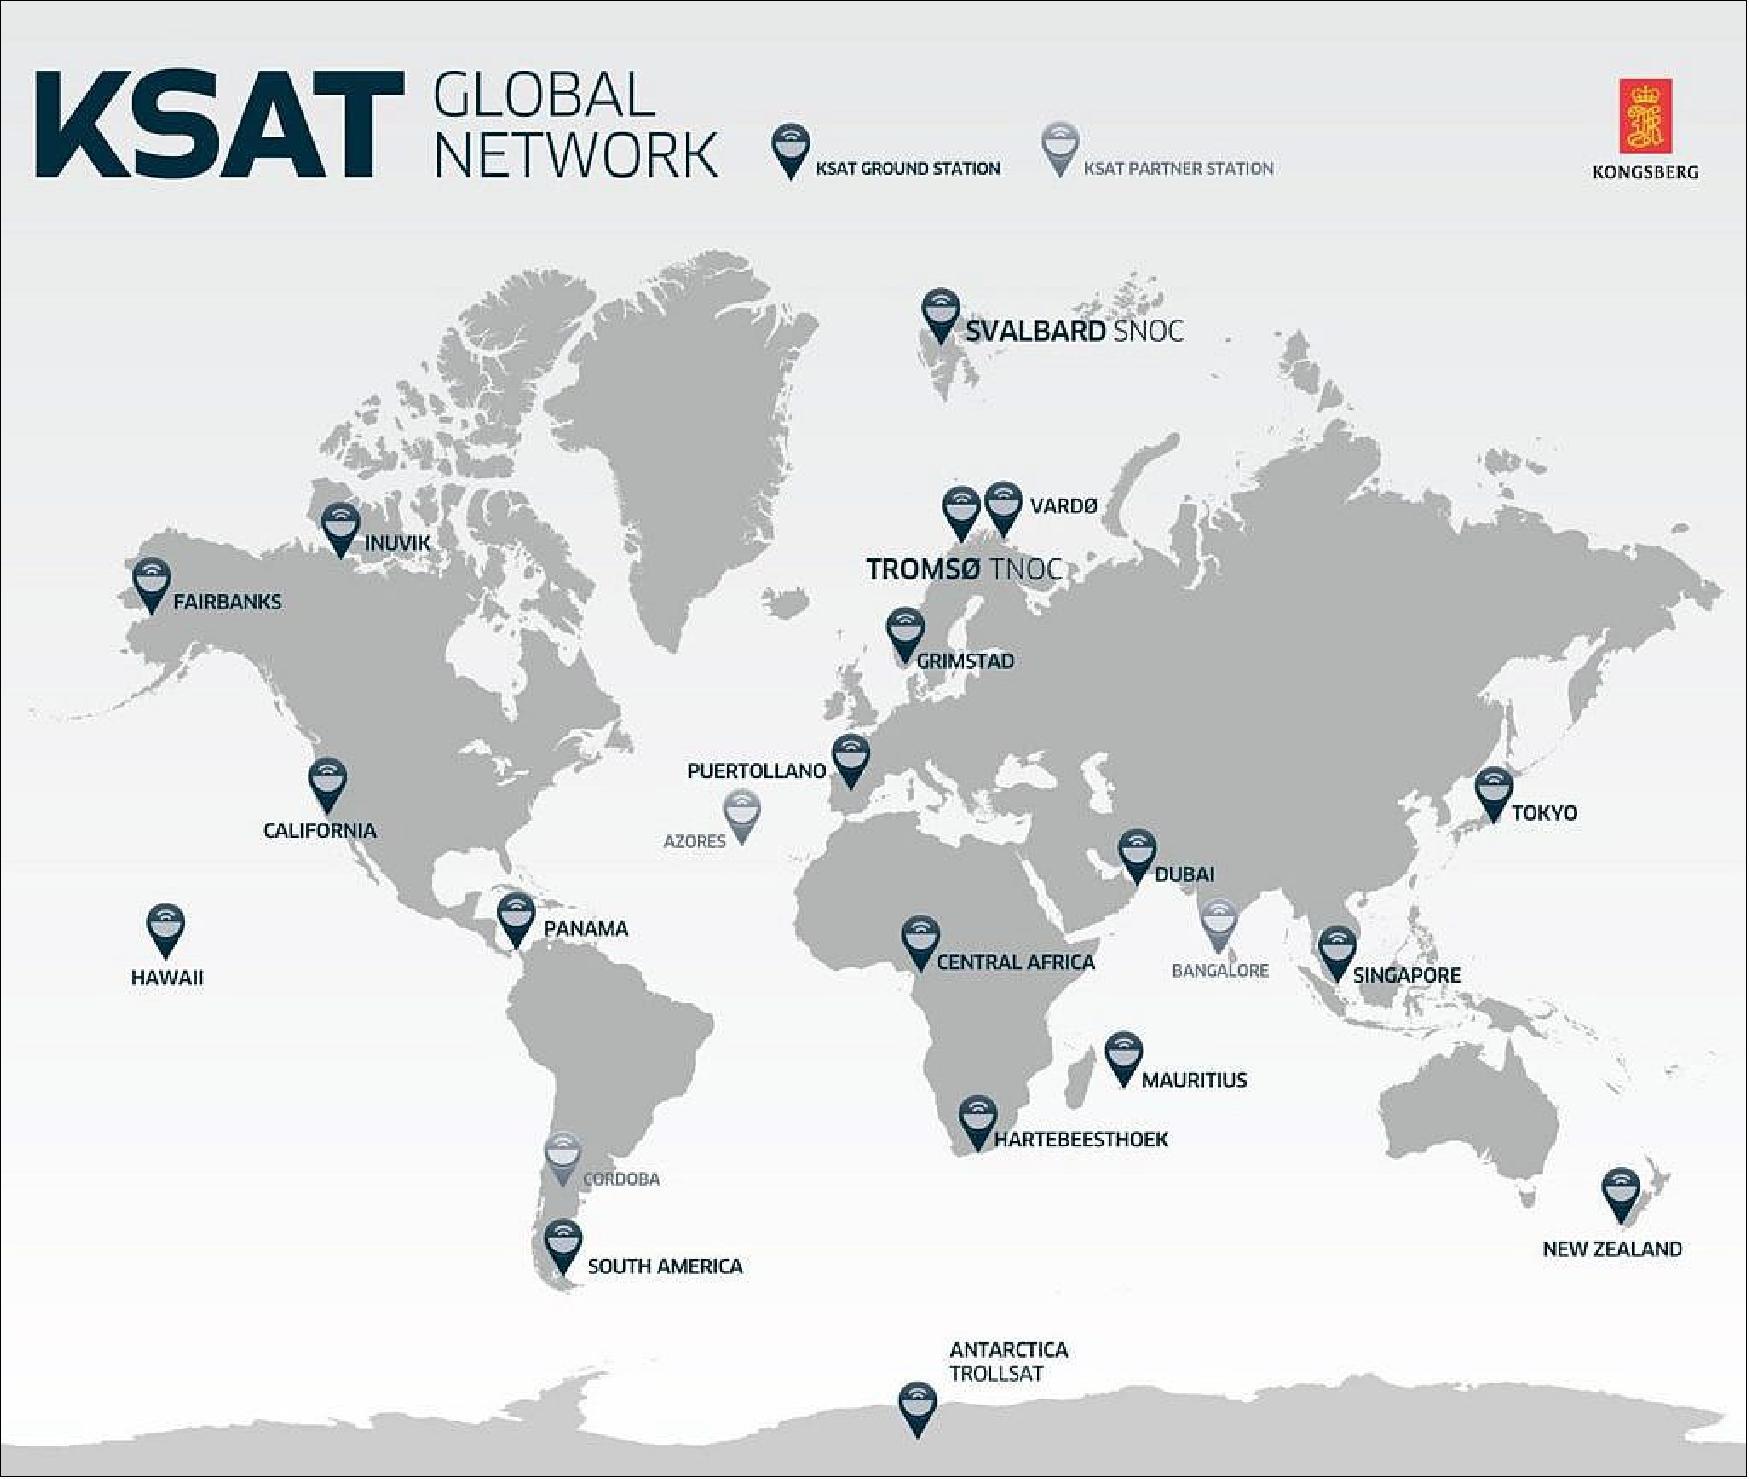 Overview of KSAT